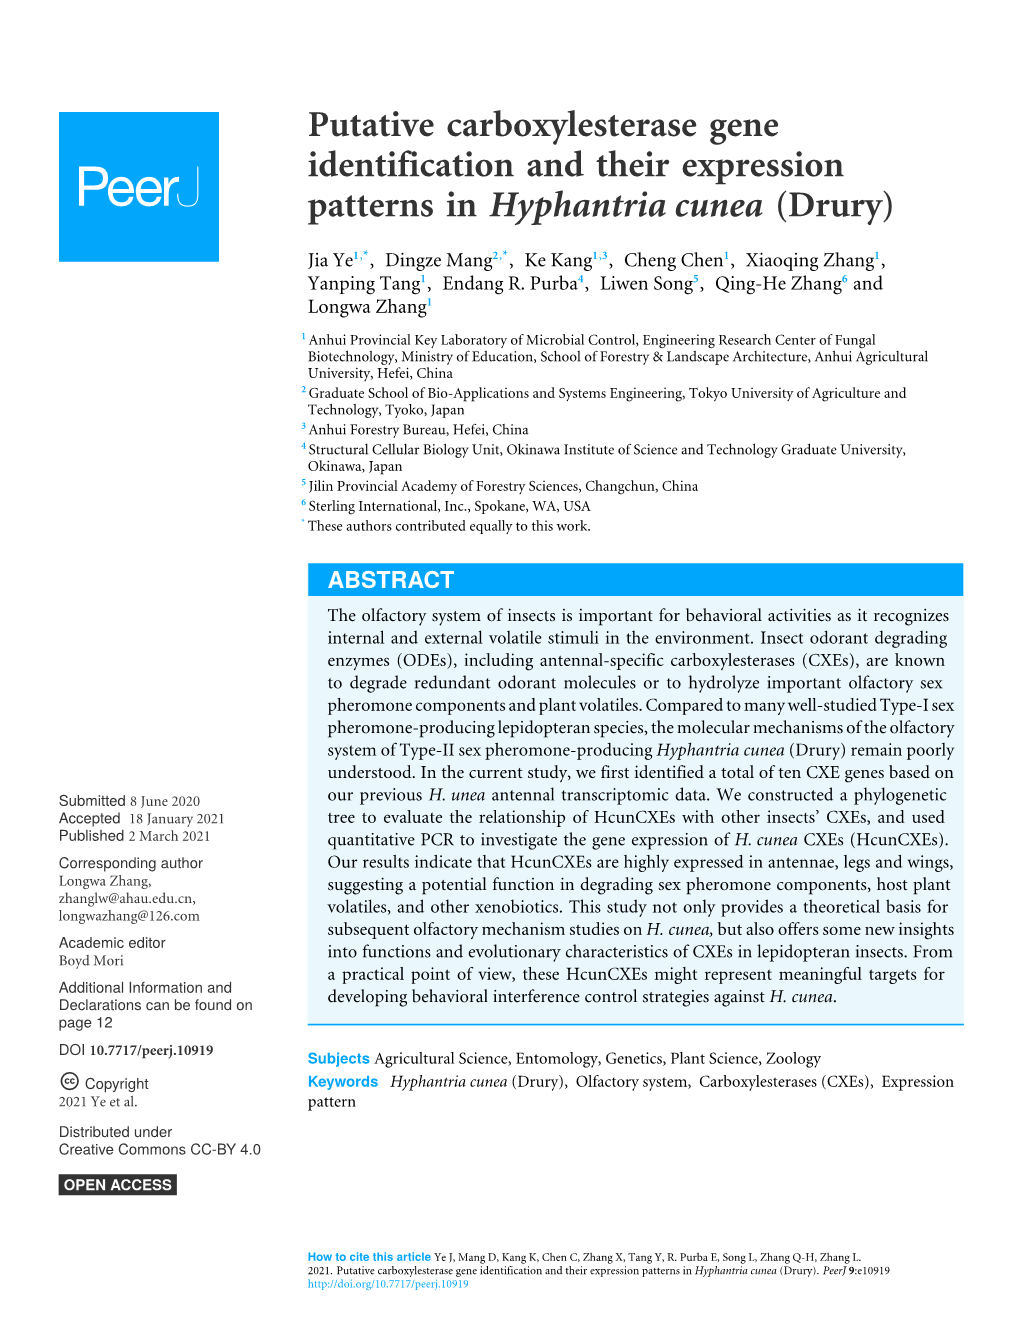 Putative Carboxylesterase Gene Identification and Their Expression Patterns in Hyphantria Cunea (Drury)